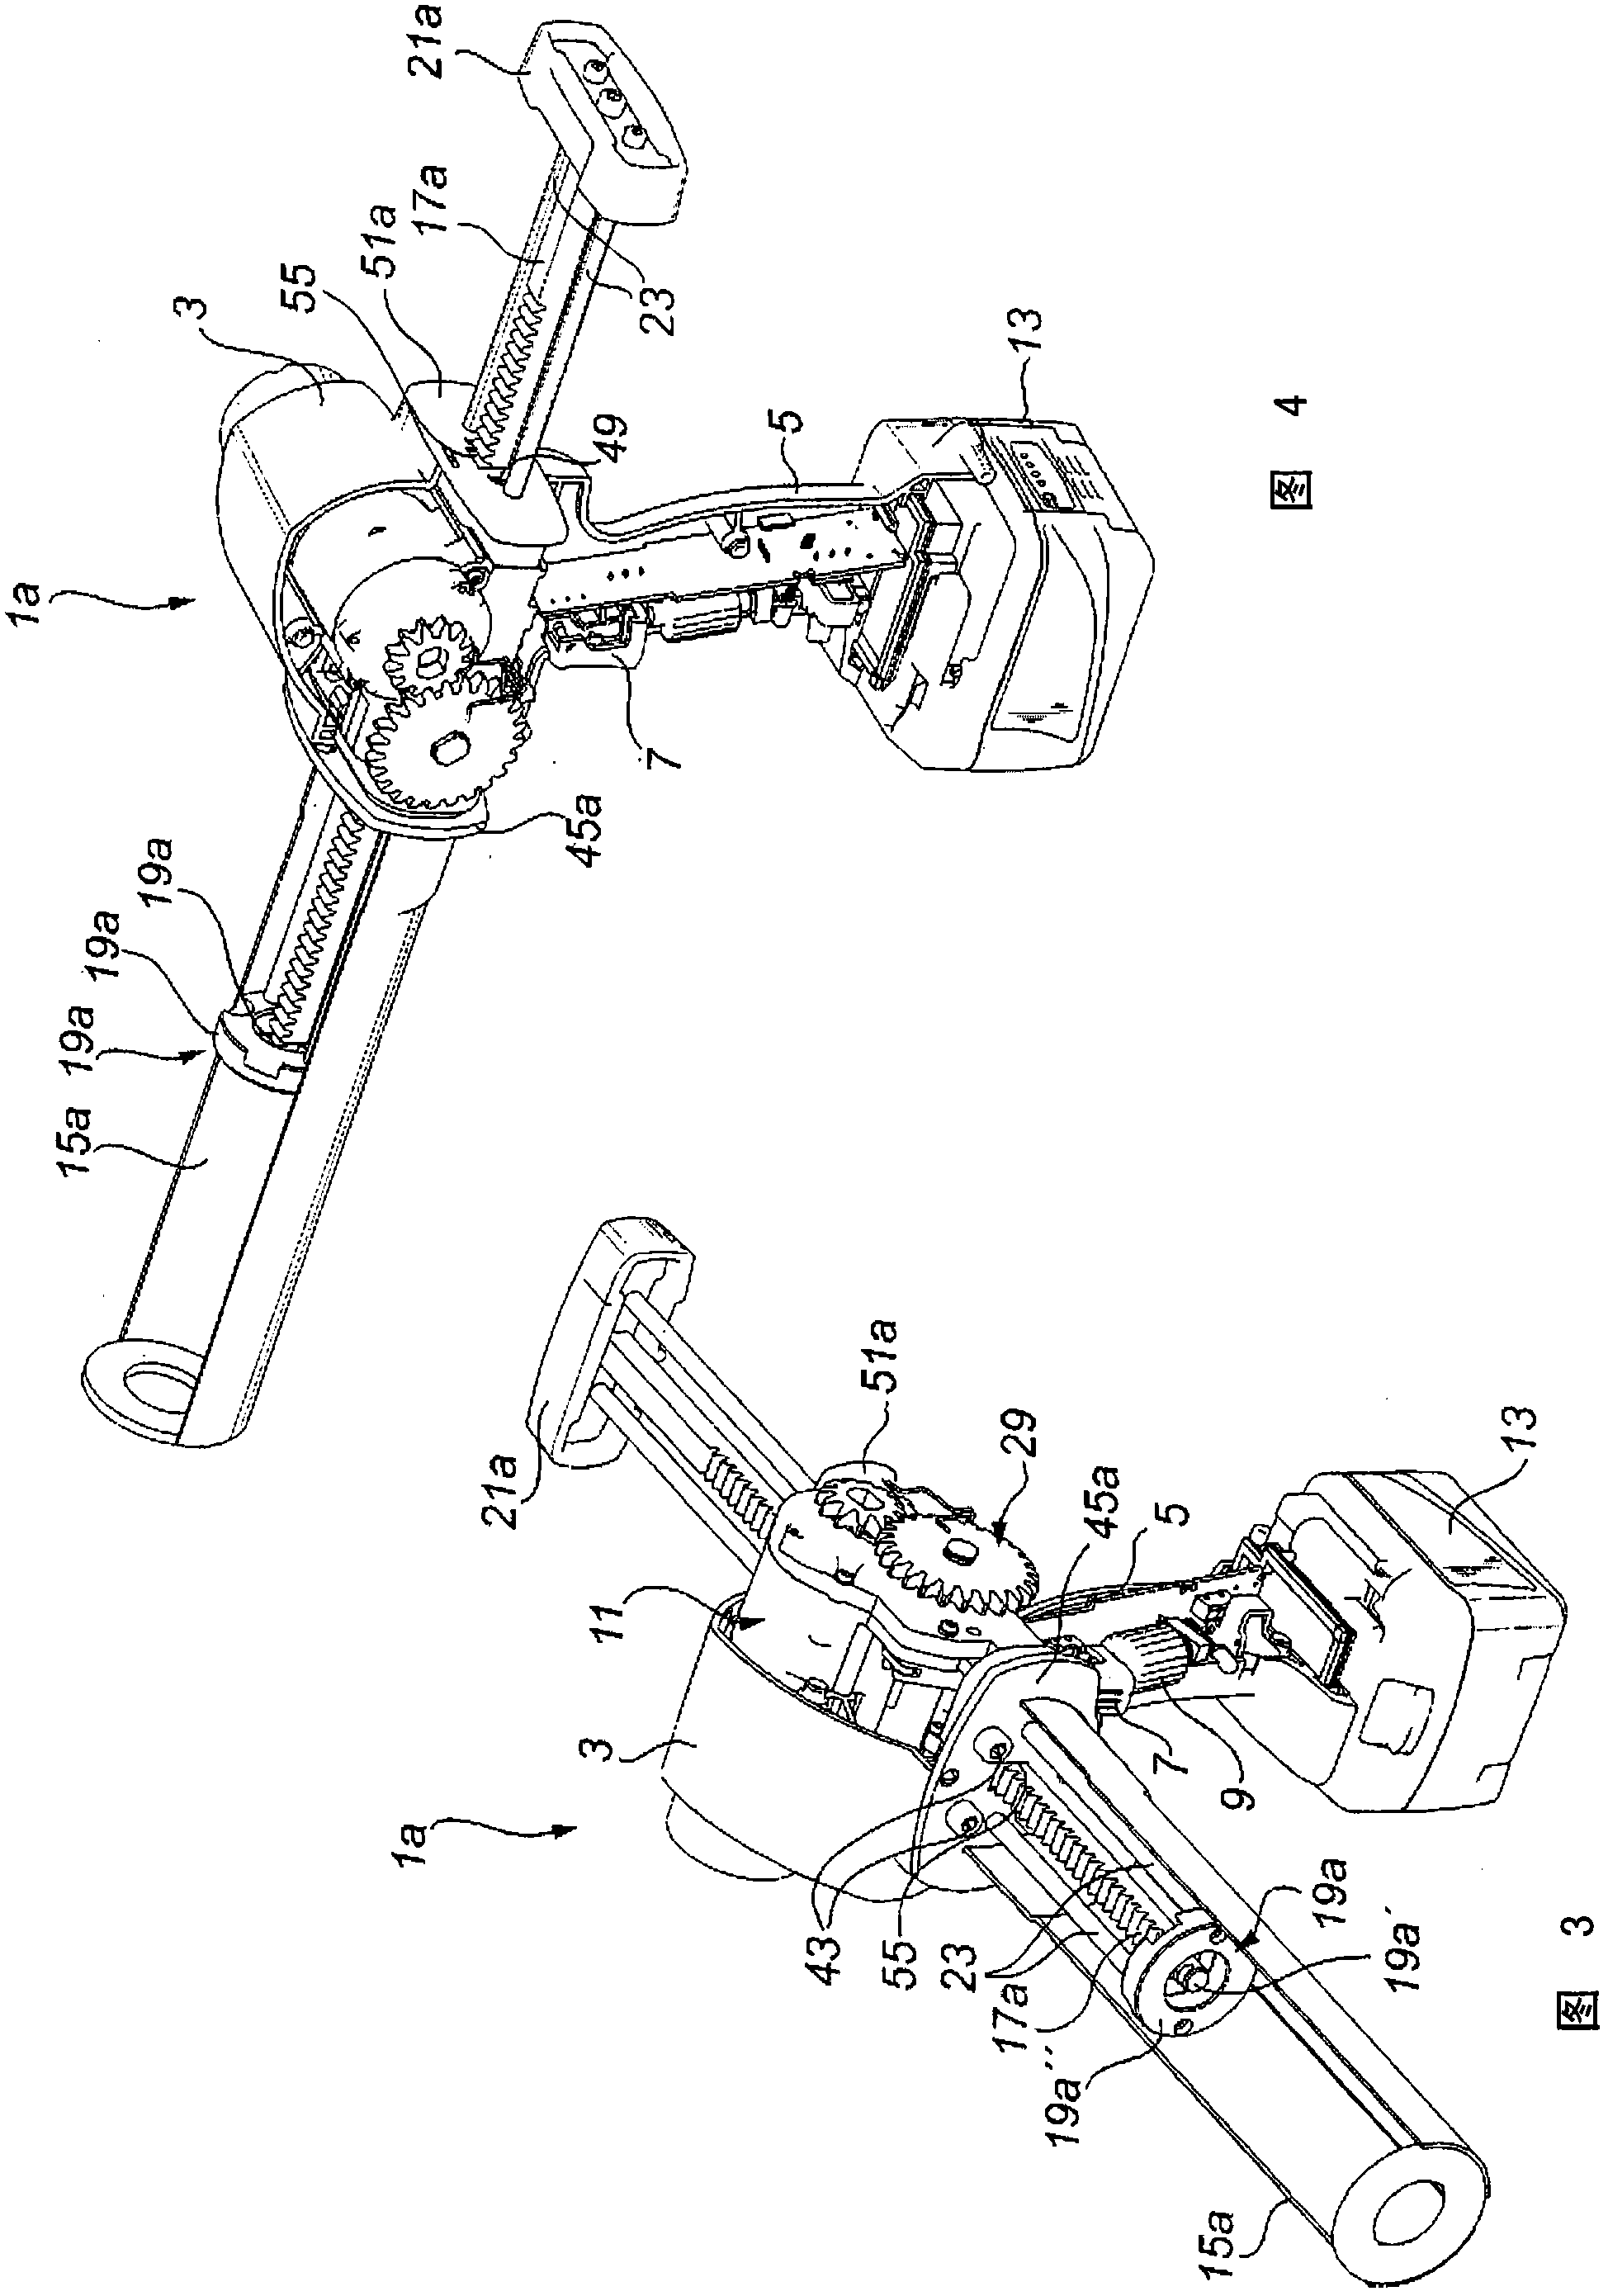 A motorized viscous material dispenser